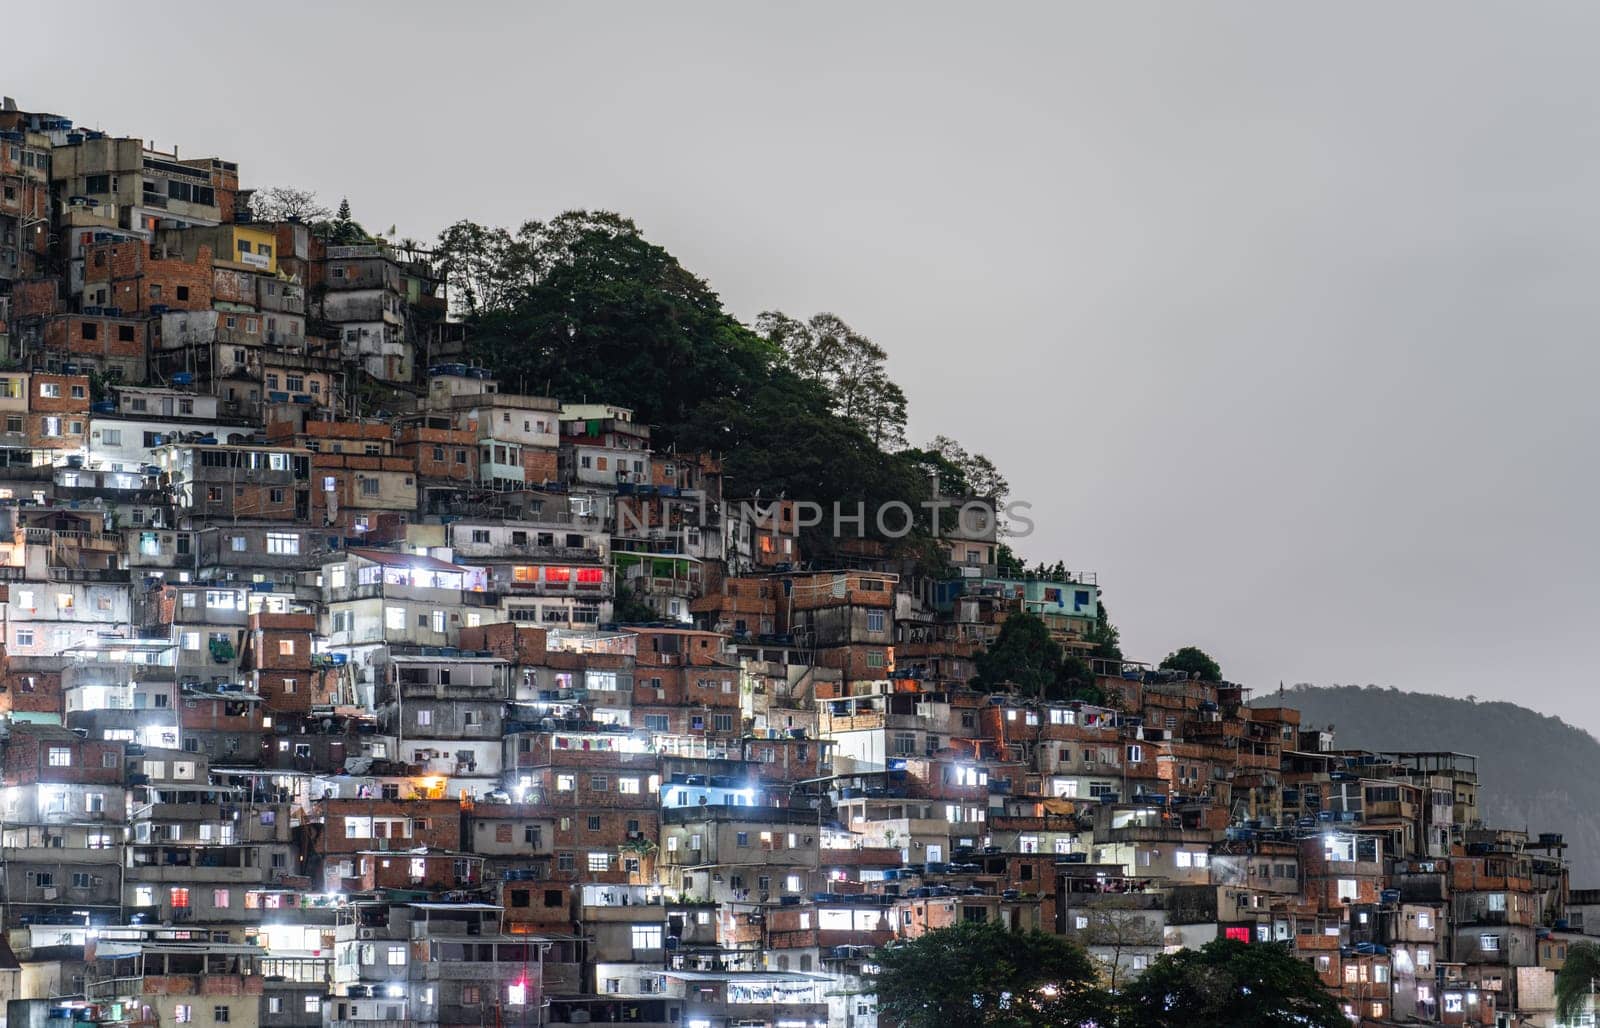 Densely packed hillside favela illuminated at night.